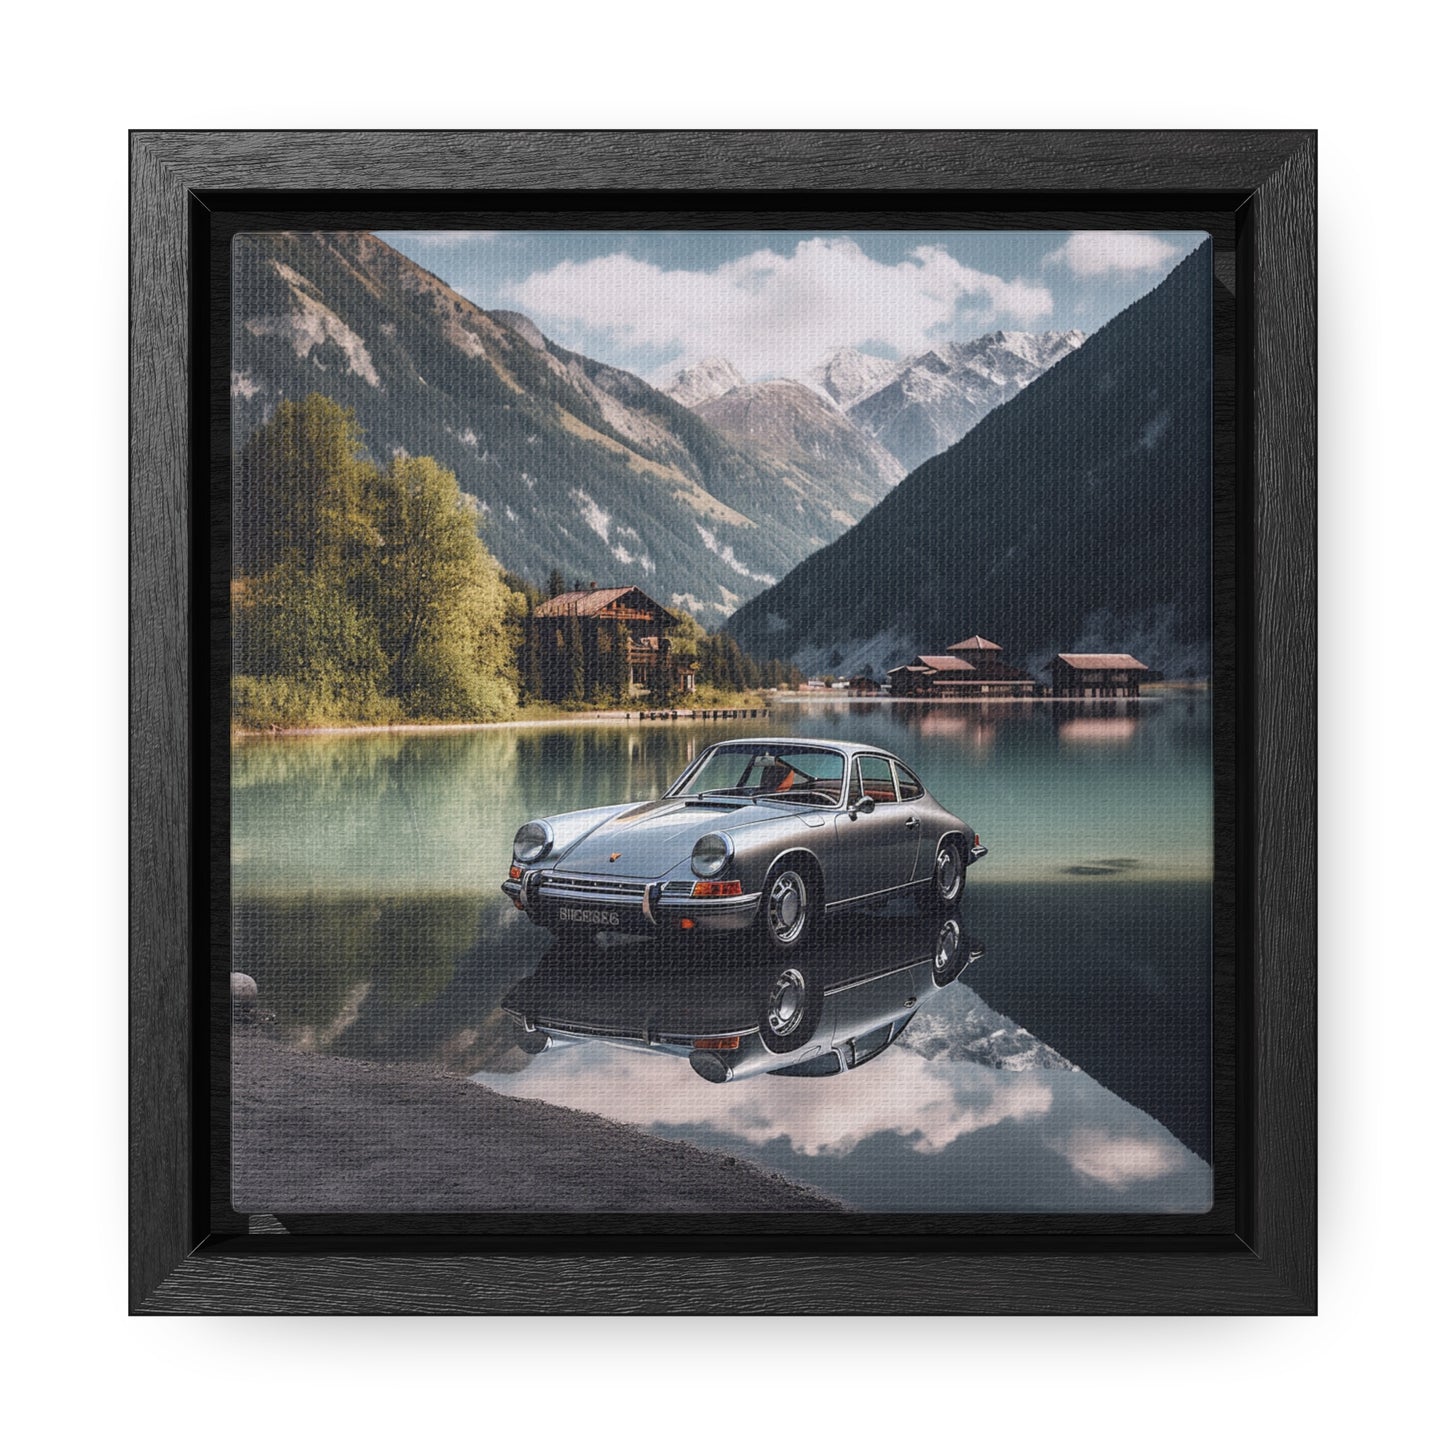 Gallery Canvas Wraps, Square Frame Porsche Lake 2